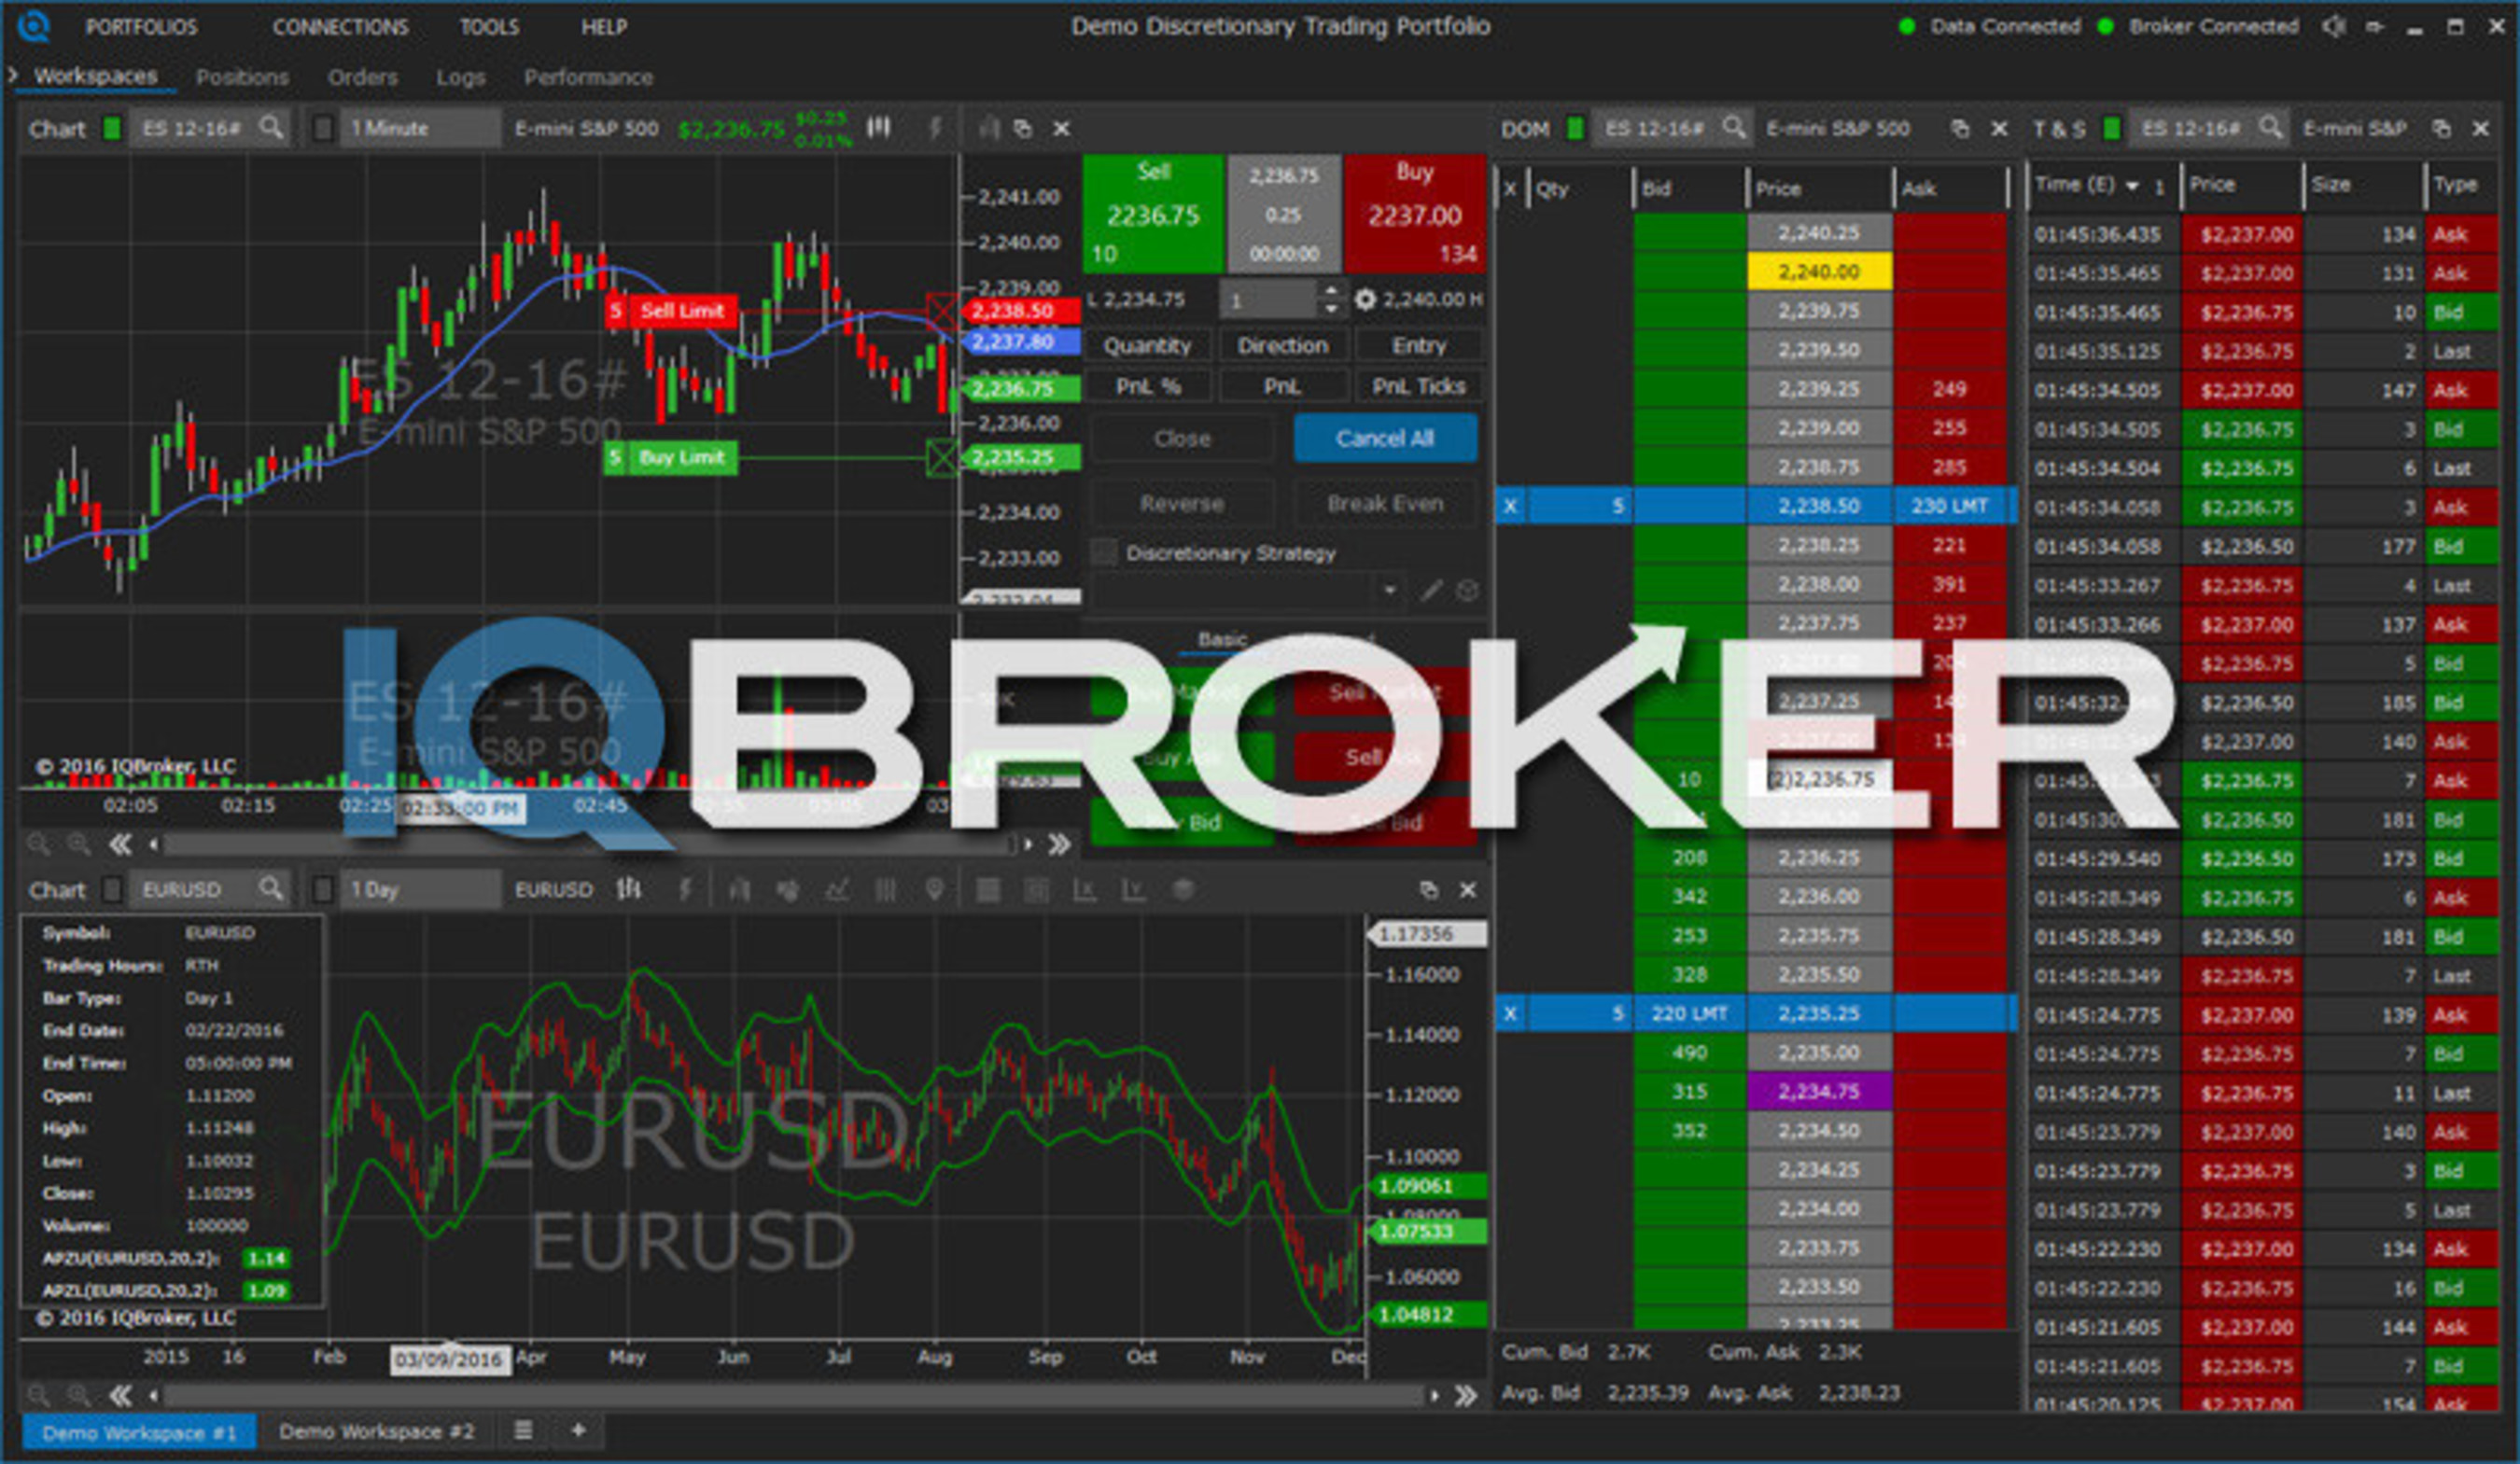 IQBroker Launches a Revolutionary Algorithmic Trading Platform